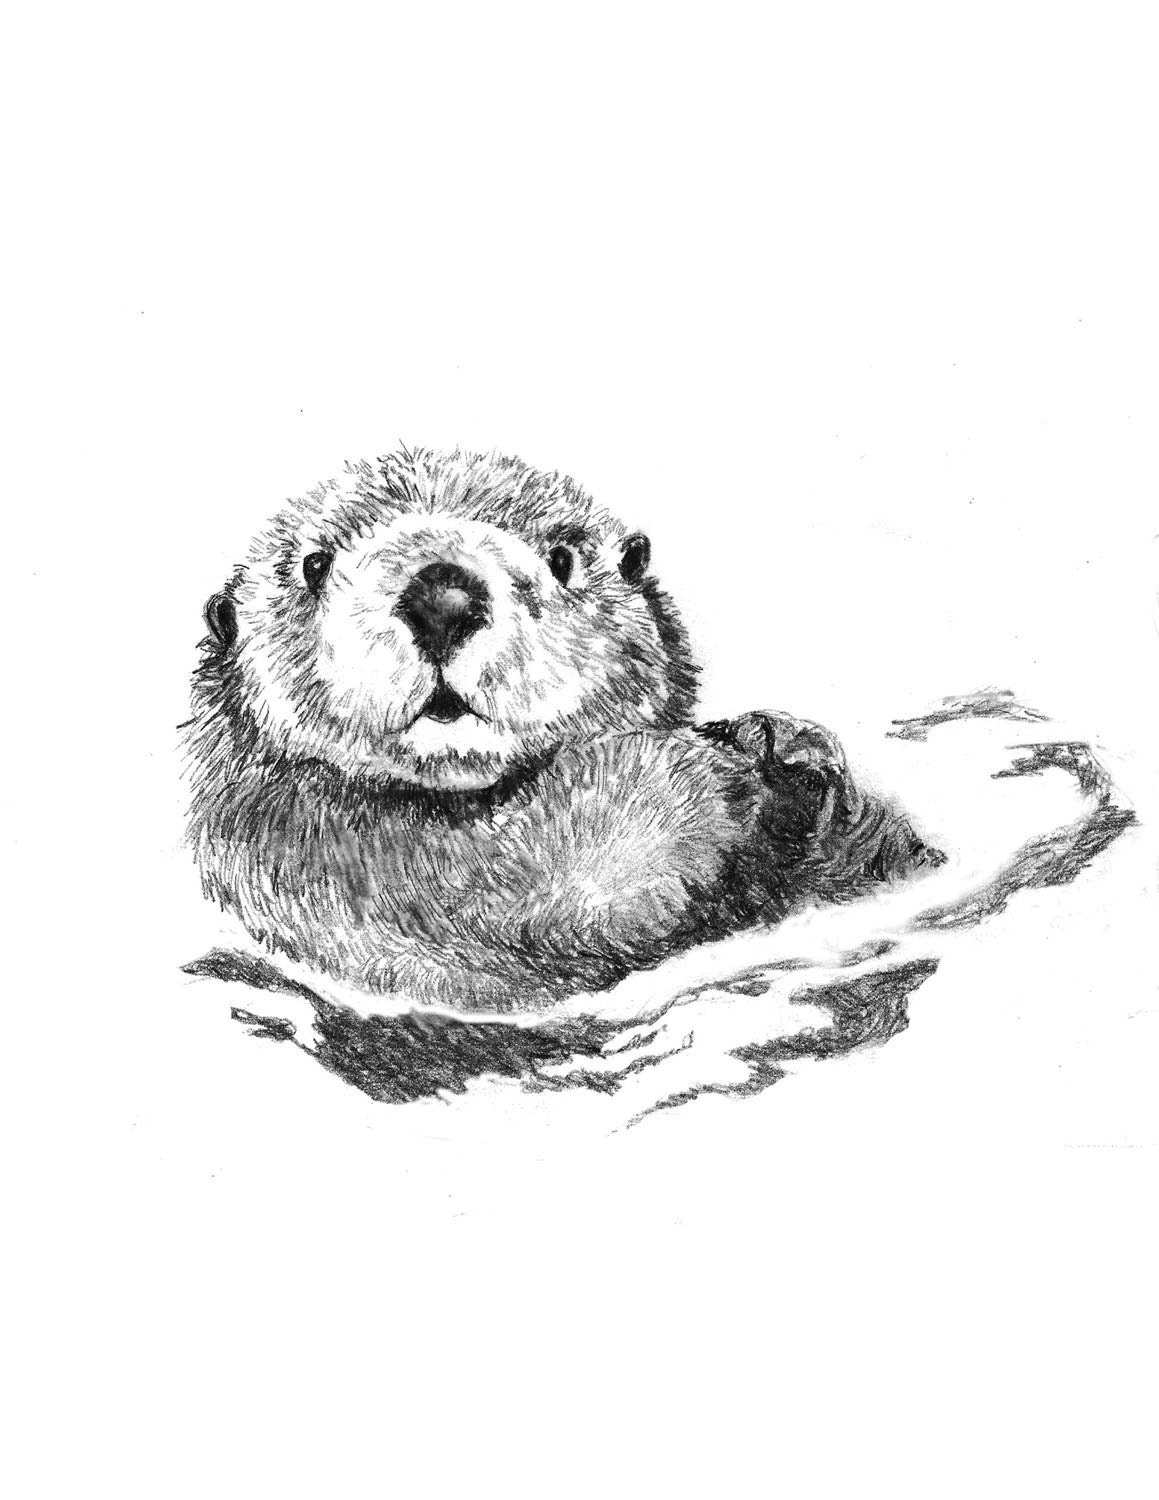 Otter Art Little Swimmer Otter Drawing by corelladesign on Etsy